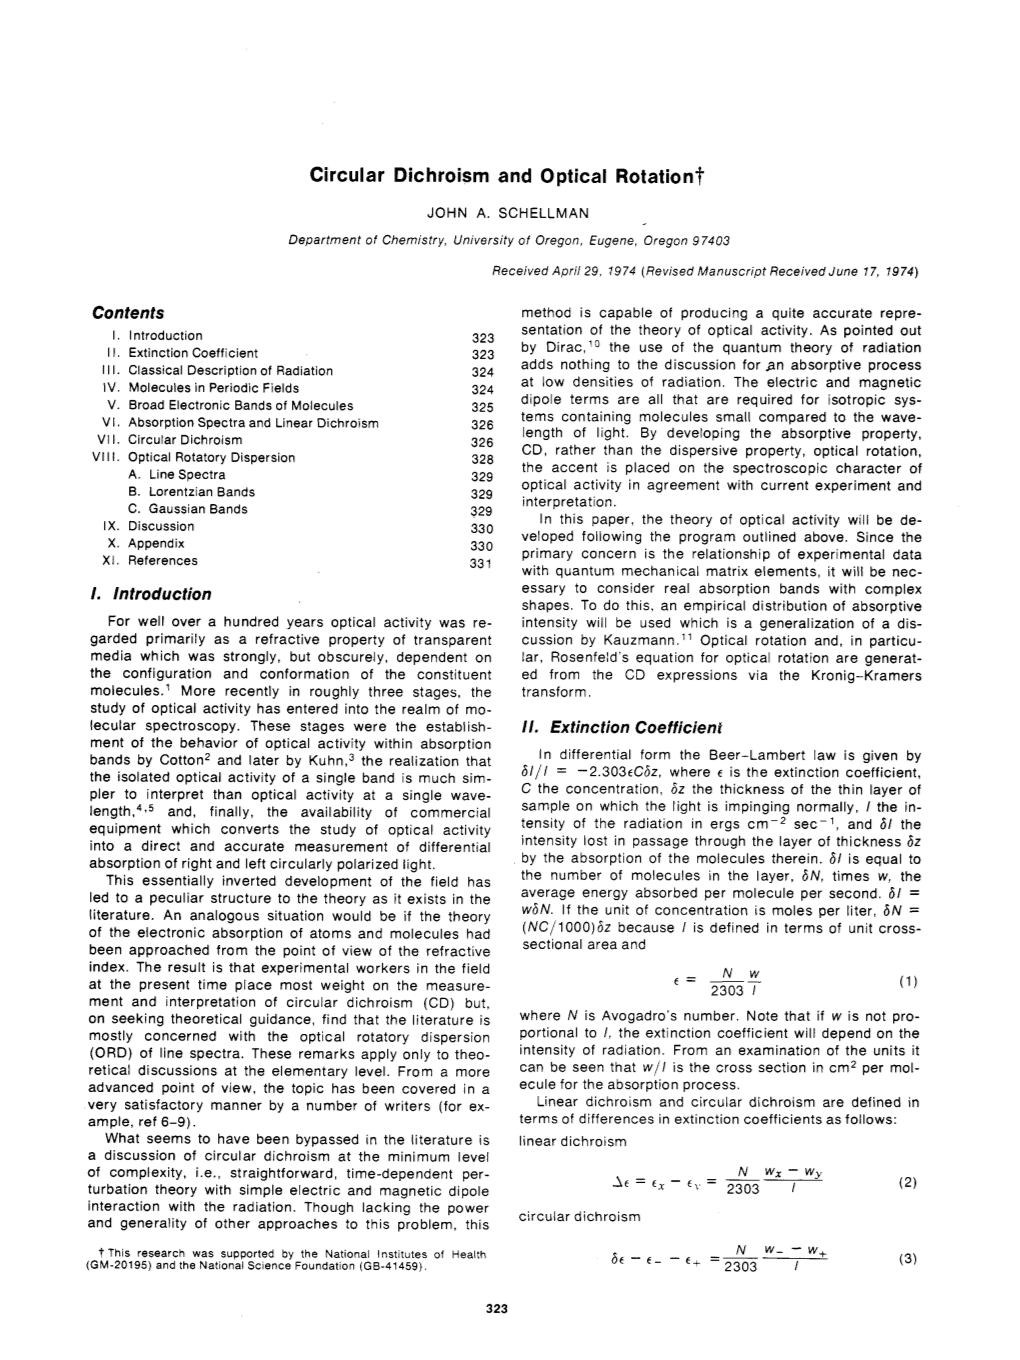 Document on Circular Dichroism and Optical Rotation